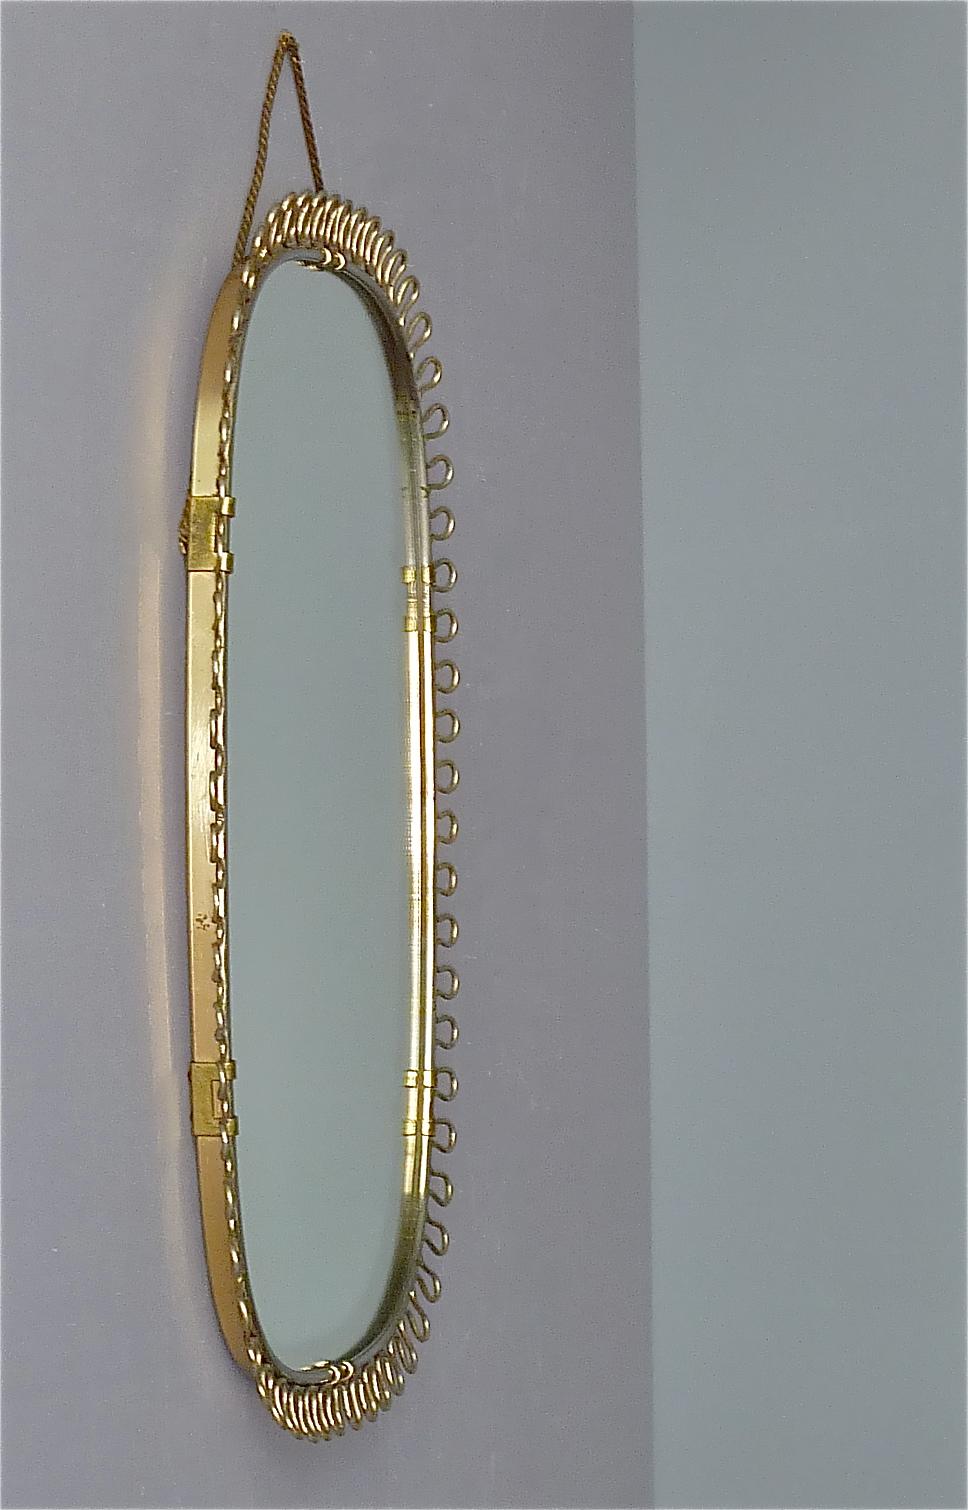 Patinated Midcentury Wall Mirror by Josef Frank Svenskt Tenn, Austria, Sweden Brass, 1950s